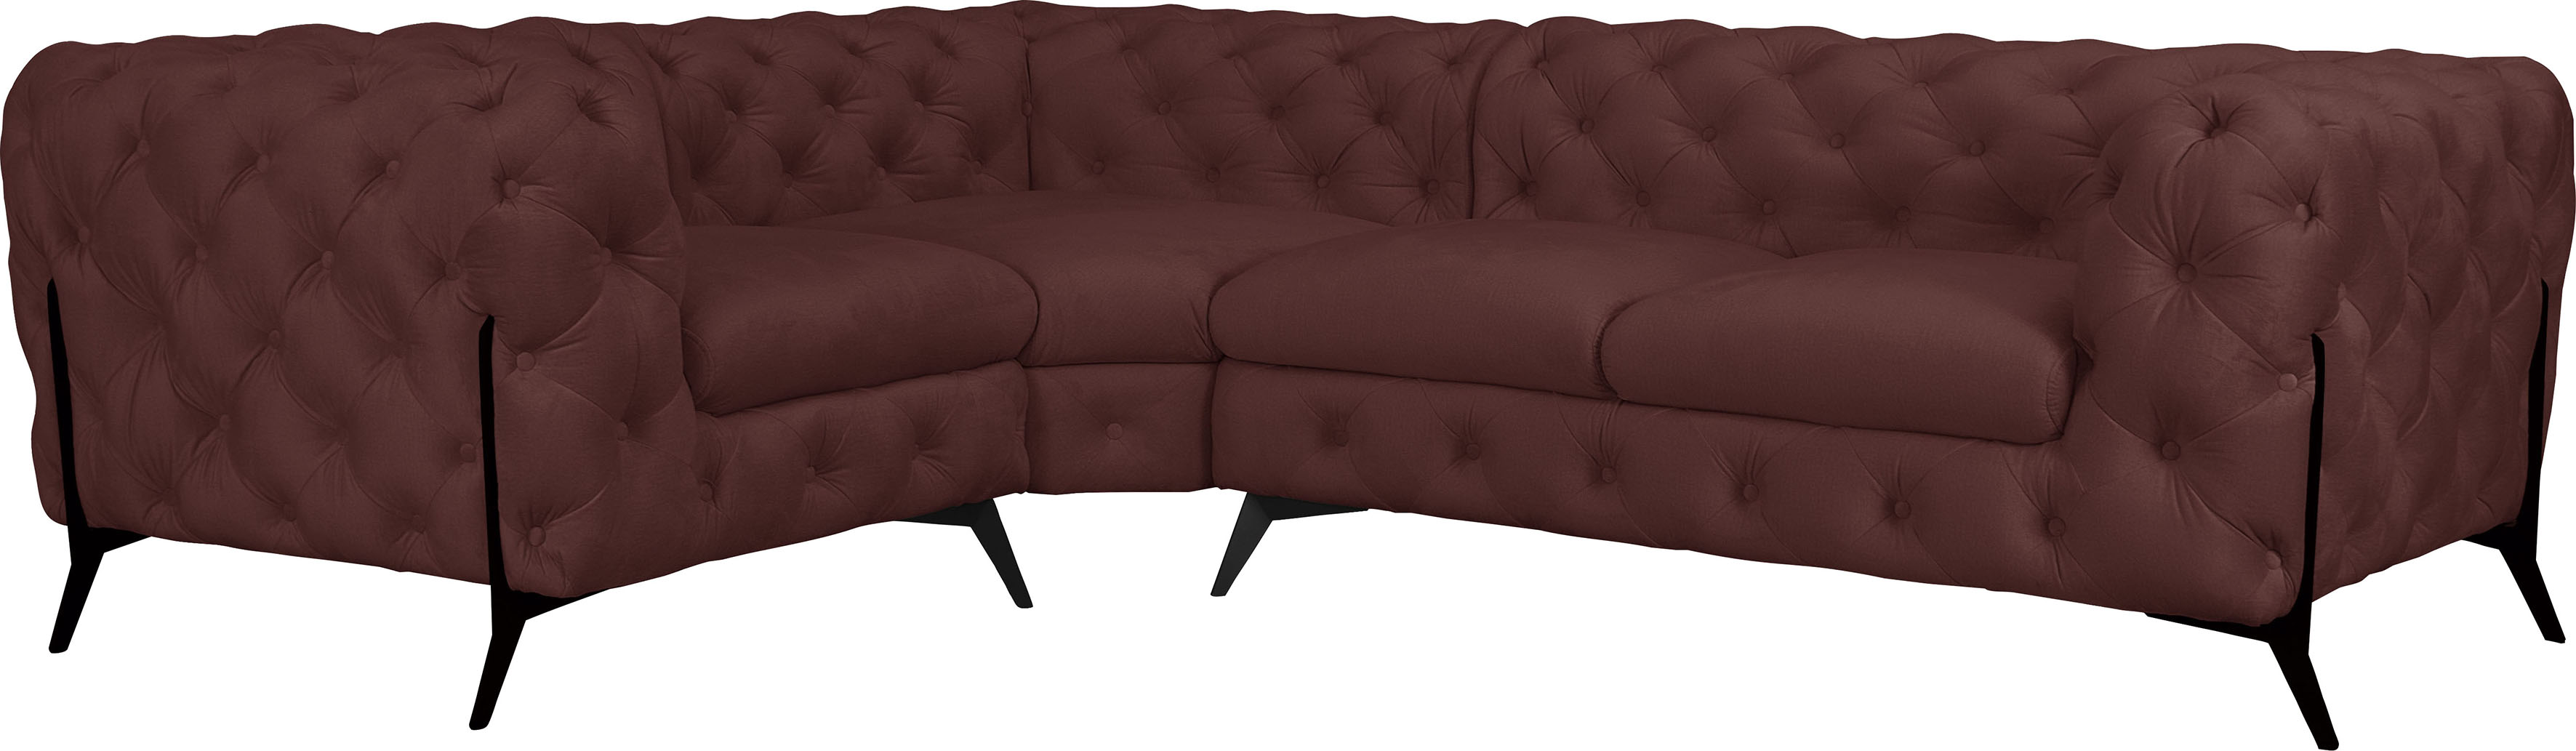 Leonique Chesterfield-Sofa "Amaury", moderne Chersterfield-Optik, Breite 262 cm, Fußfarbe wählbar